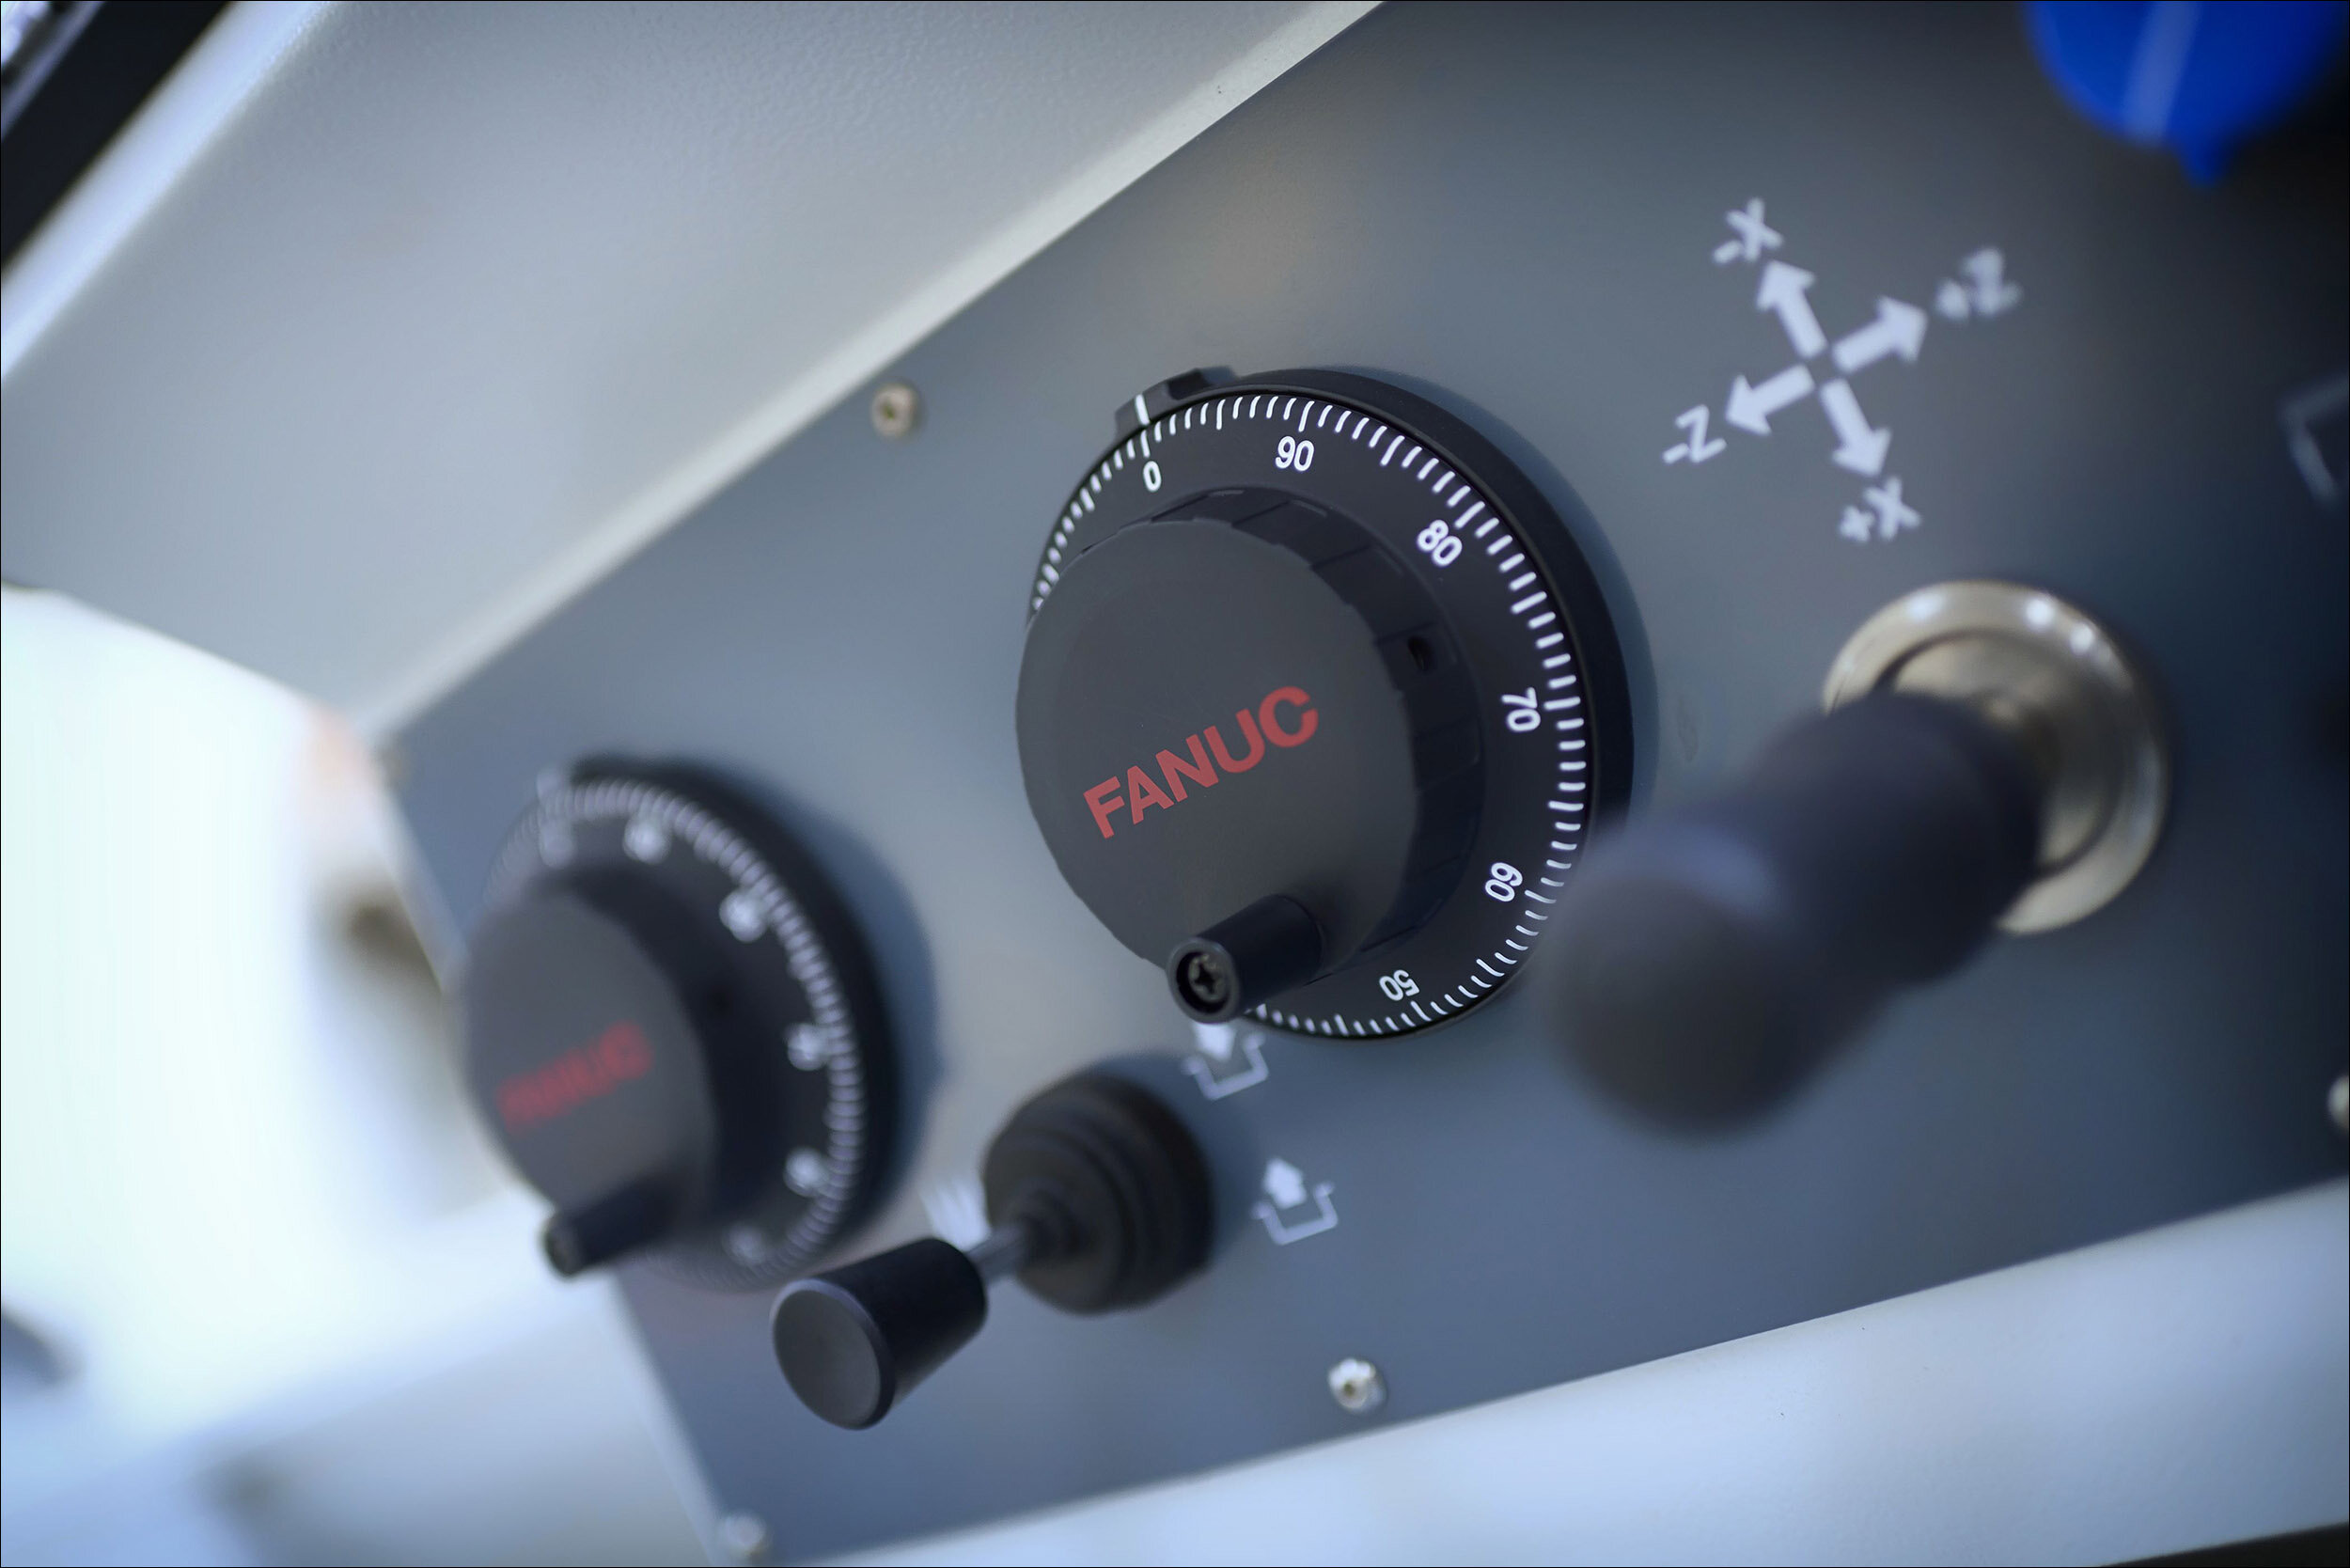 Close-up of FANUC CNC Lathe controls